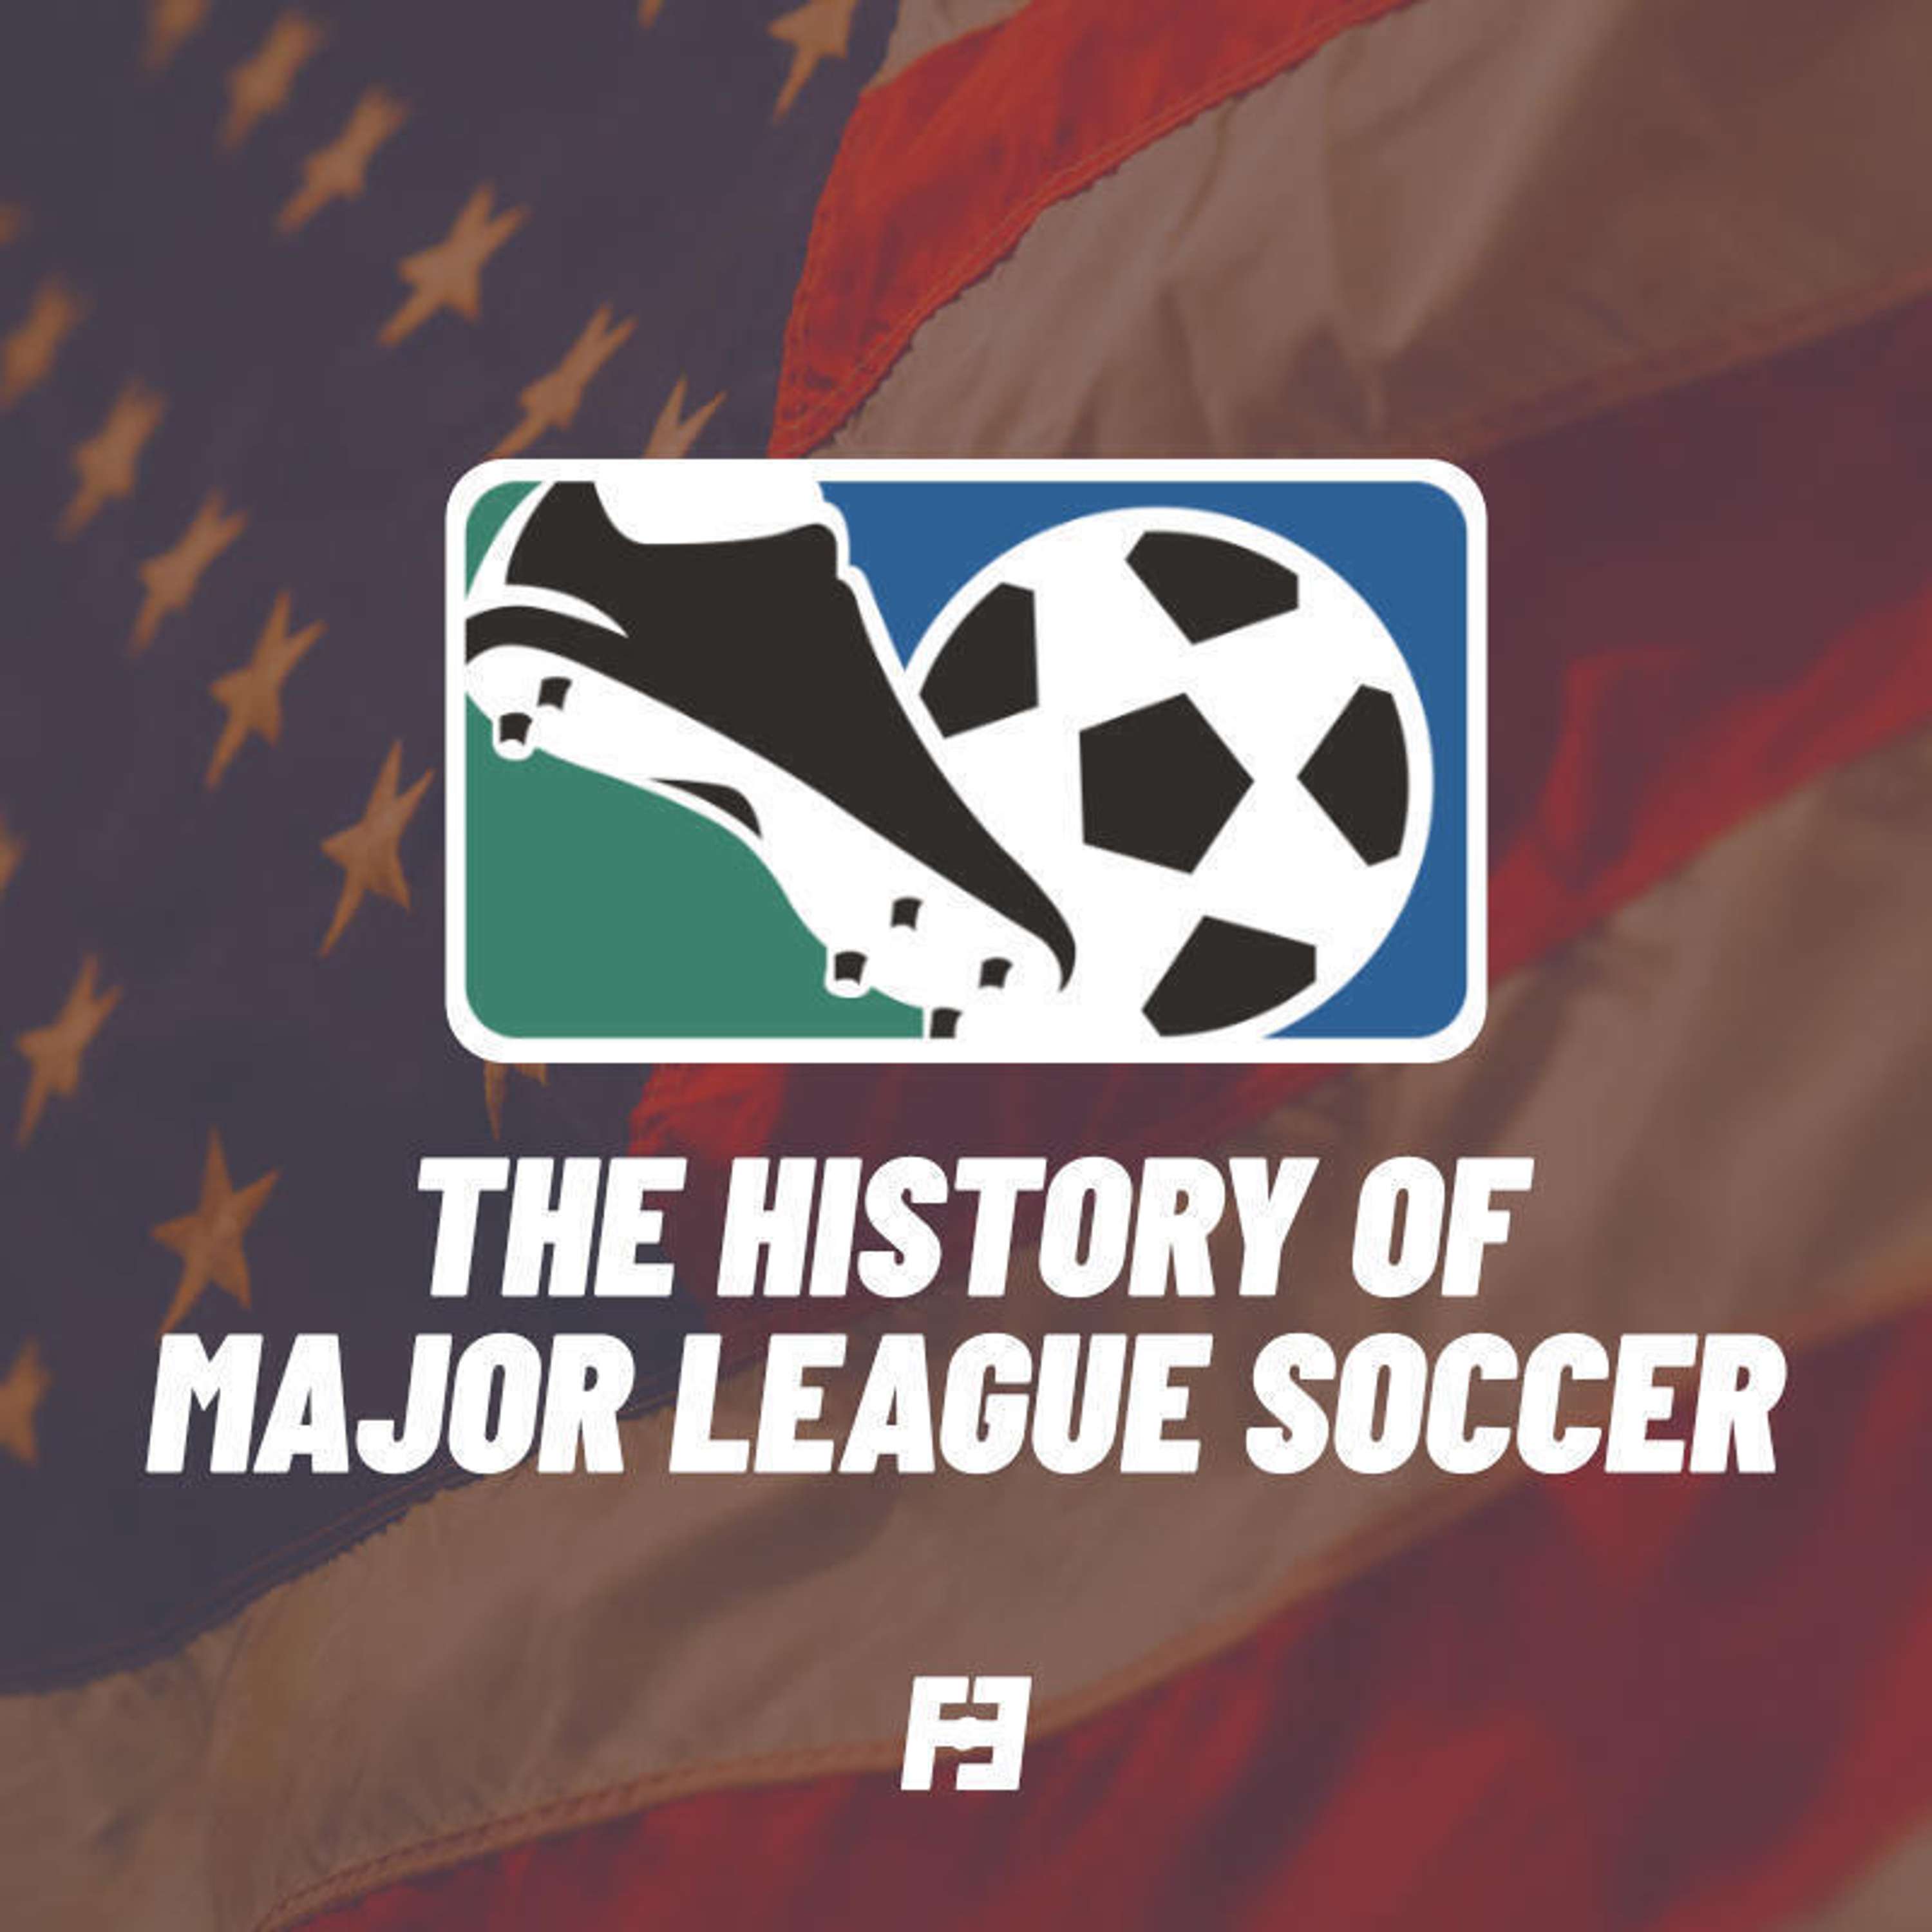 The History of Major League Soccer